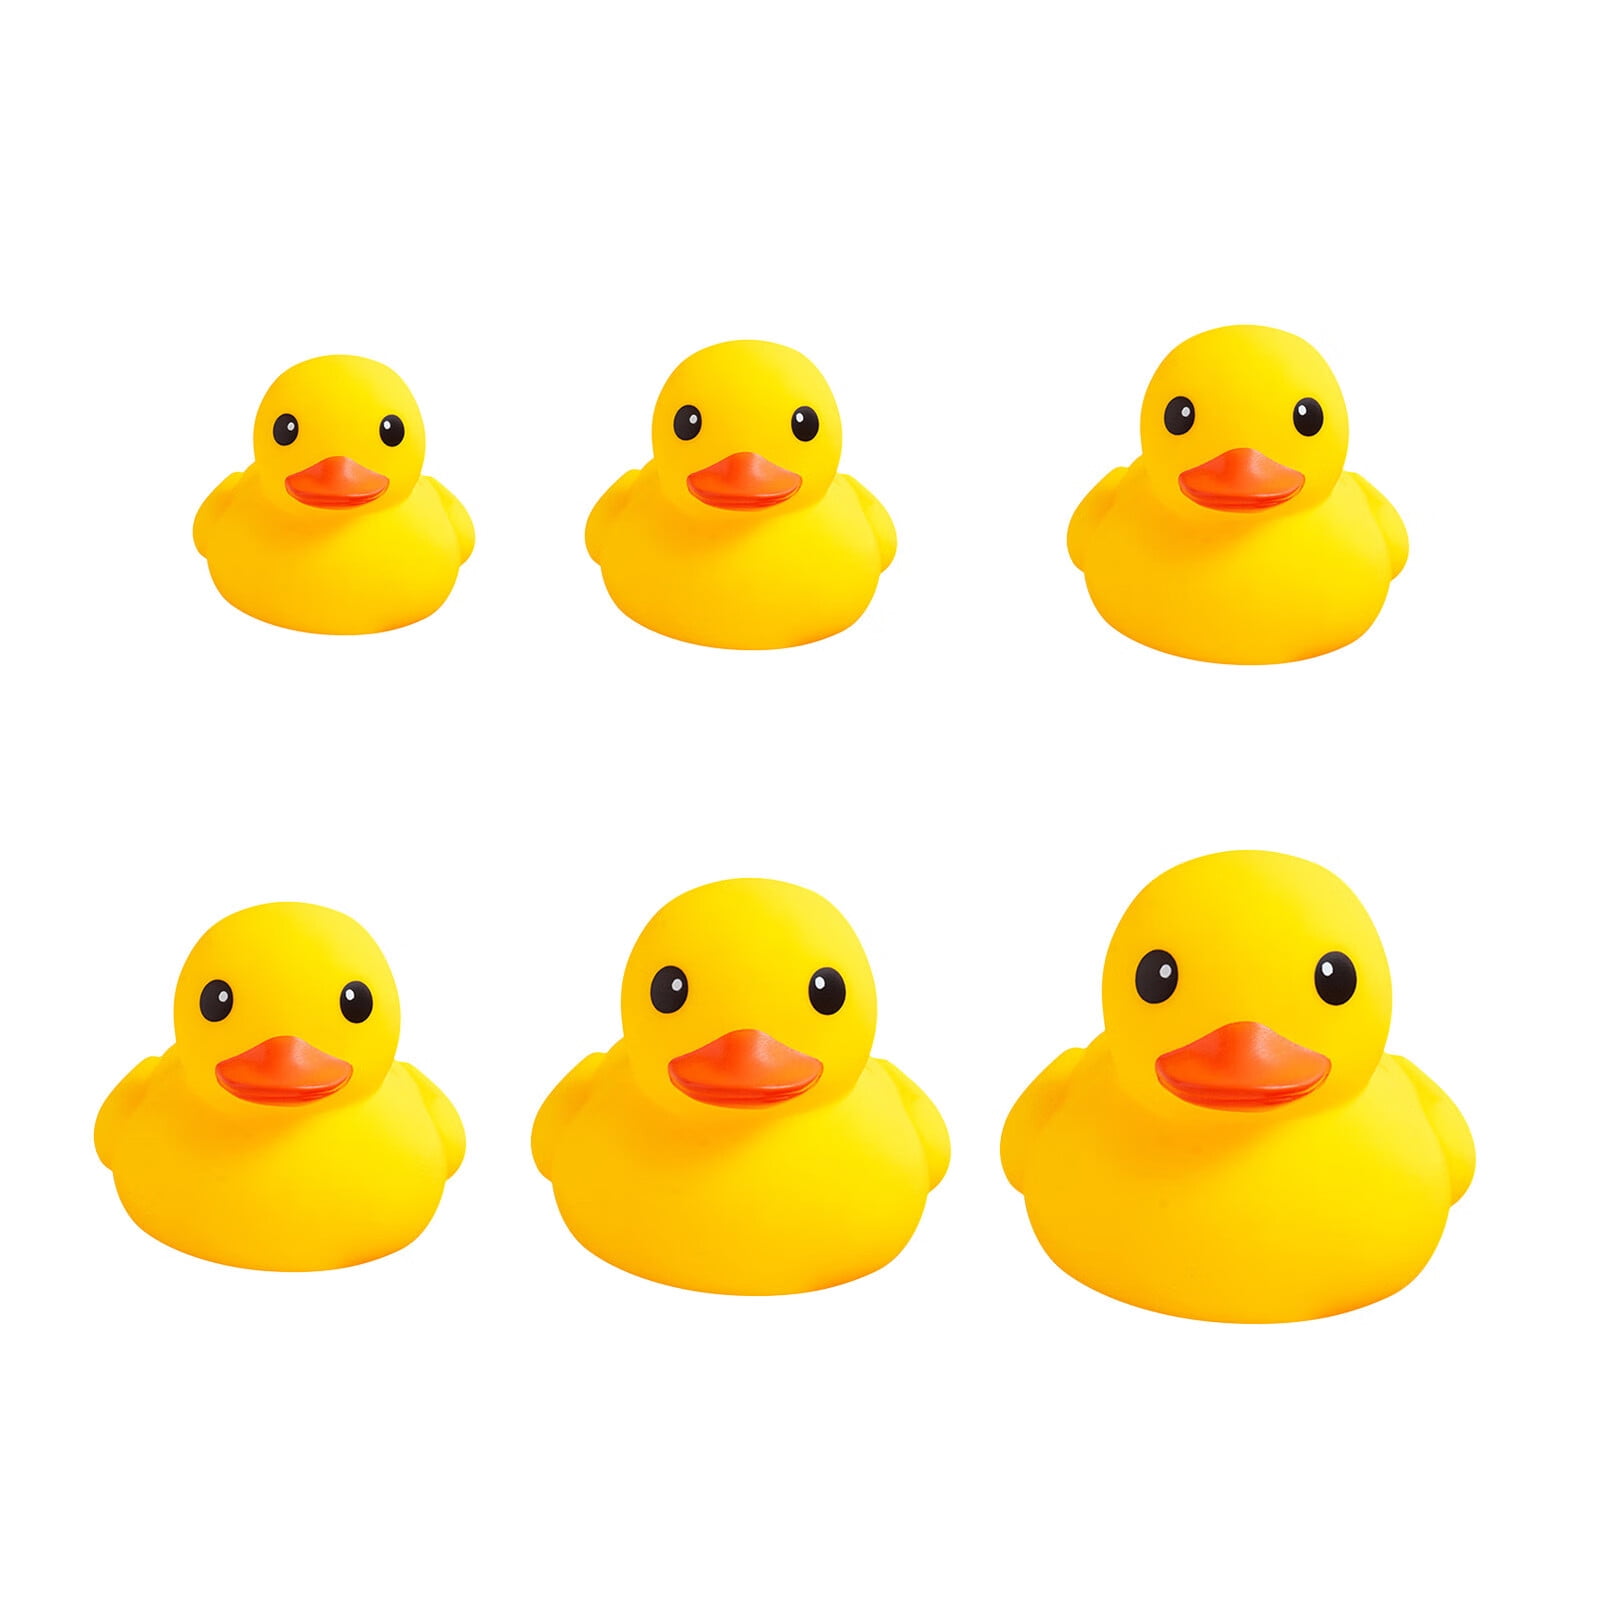 Happy Birthday Girl Rubber Duck  Buy premium rubber ducks online - world  wide delivery!